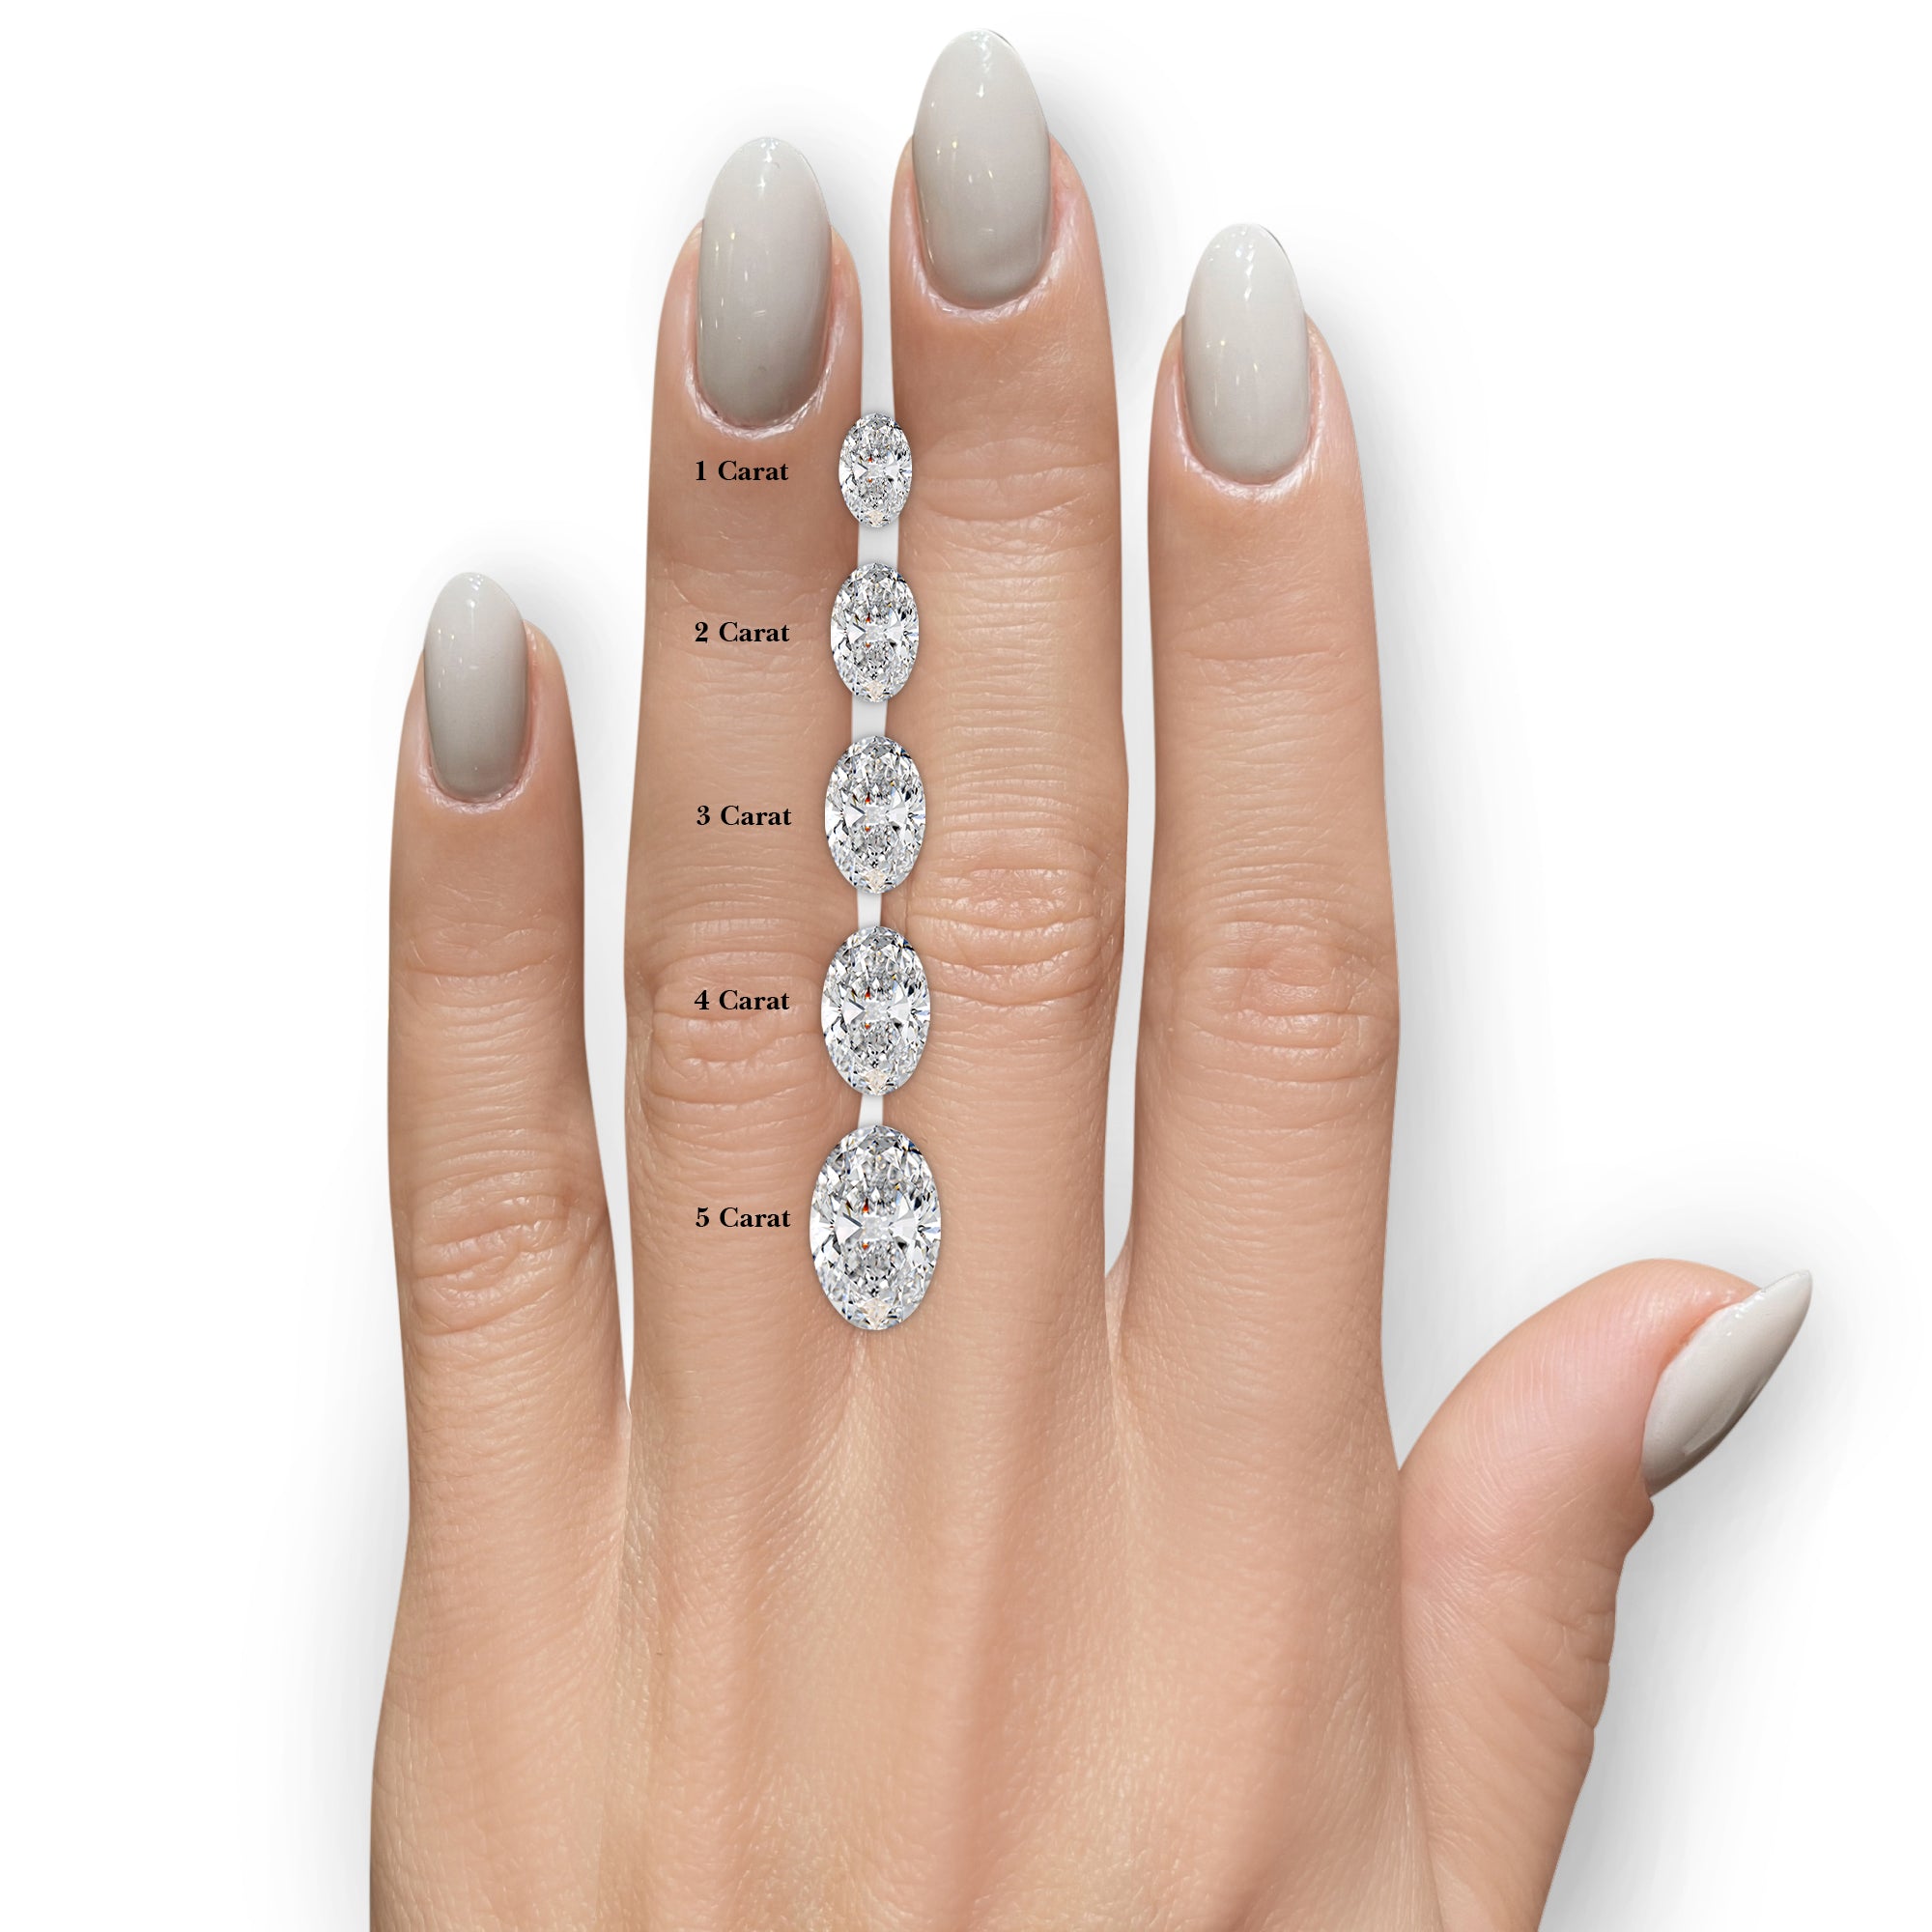 Alicia Diamond Engagement Ring -14K Rose Gold